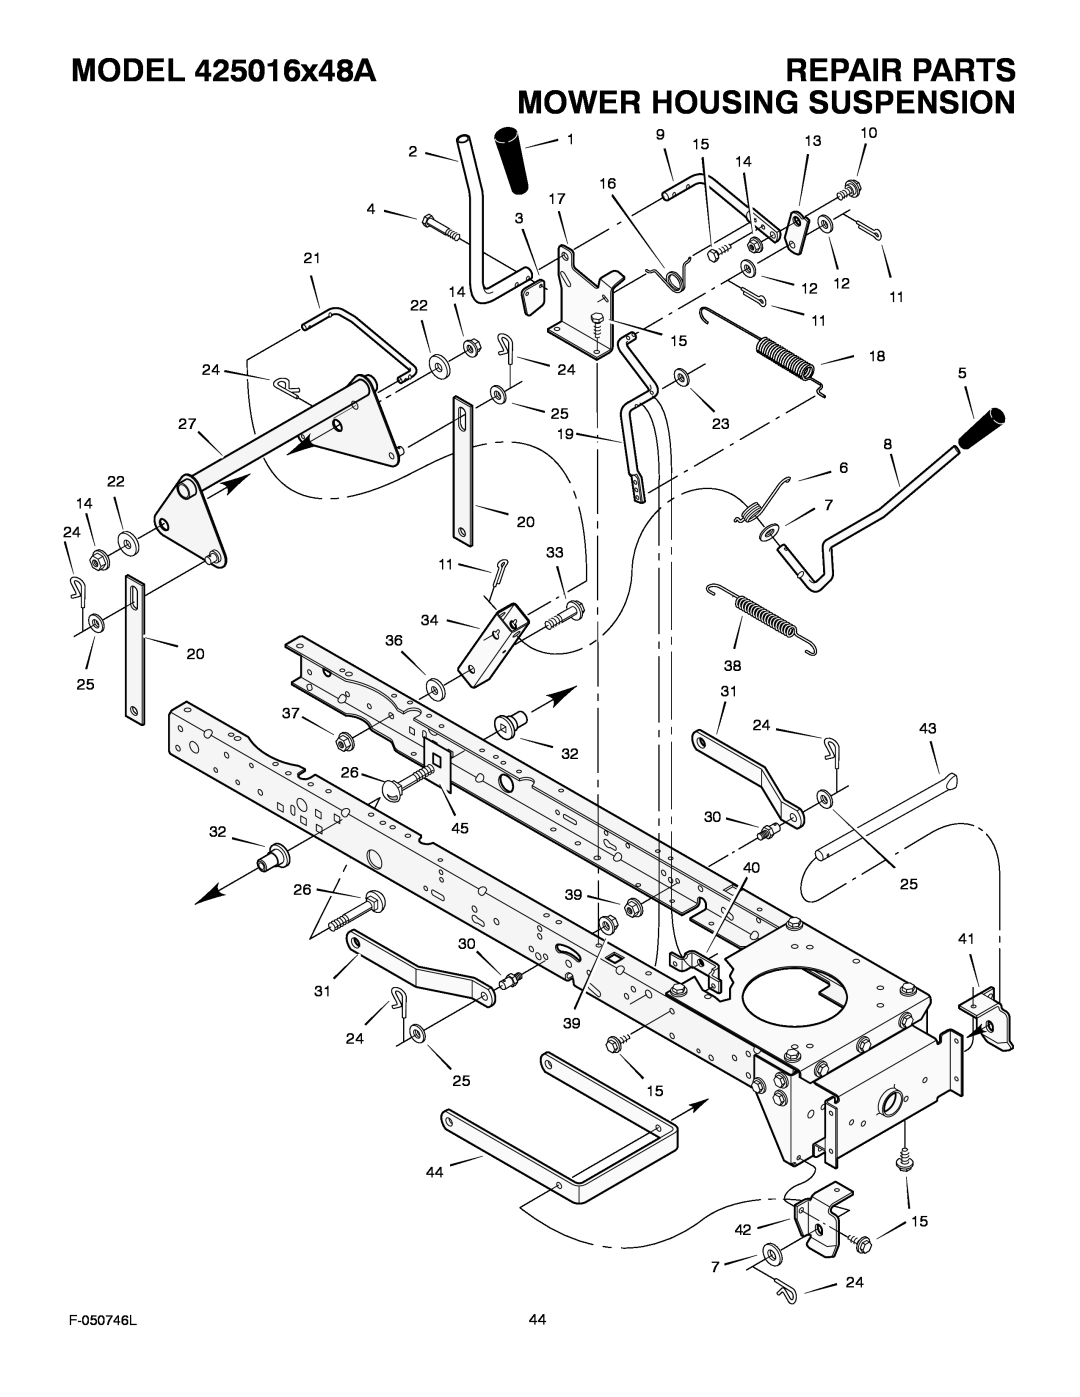 Murray manual Mower Housing Suspension, MODEL 425016x48A, Repair Parts, F-050746L 